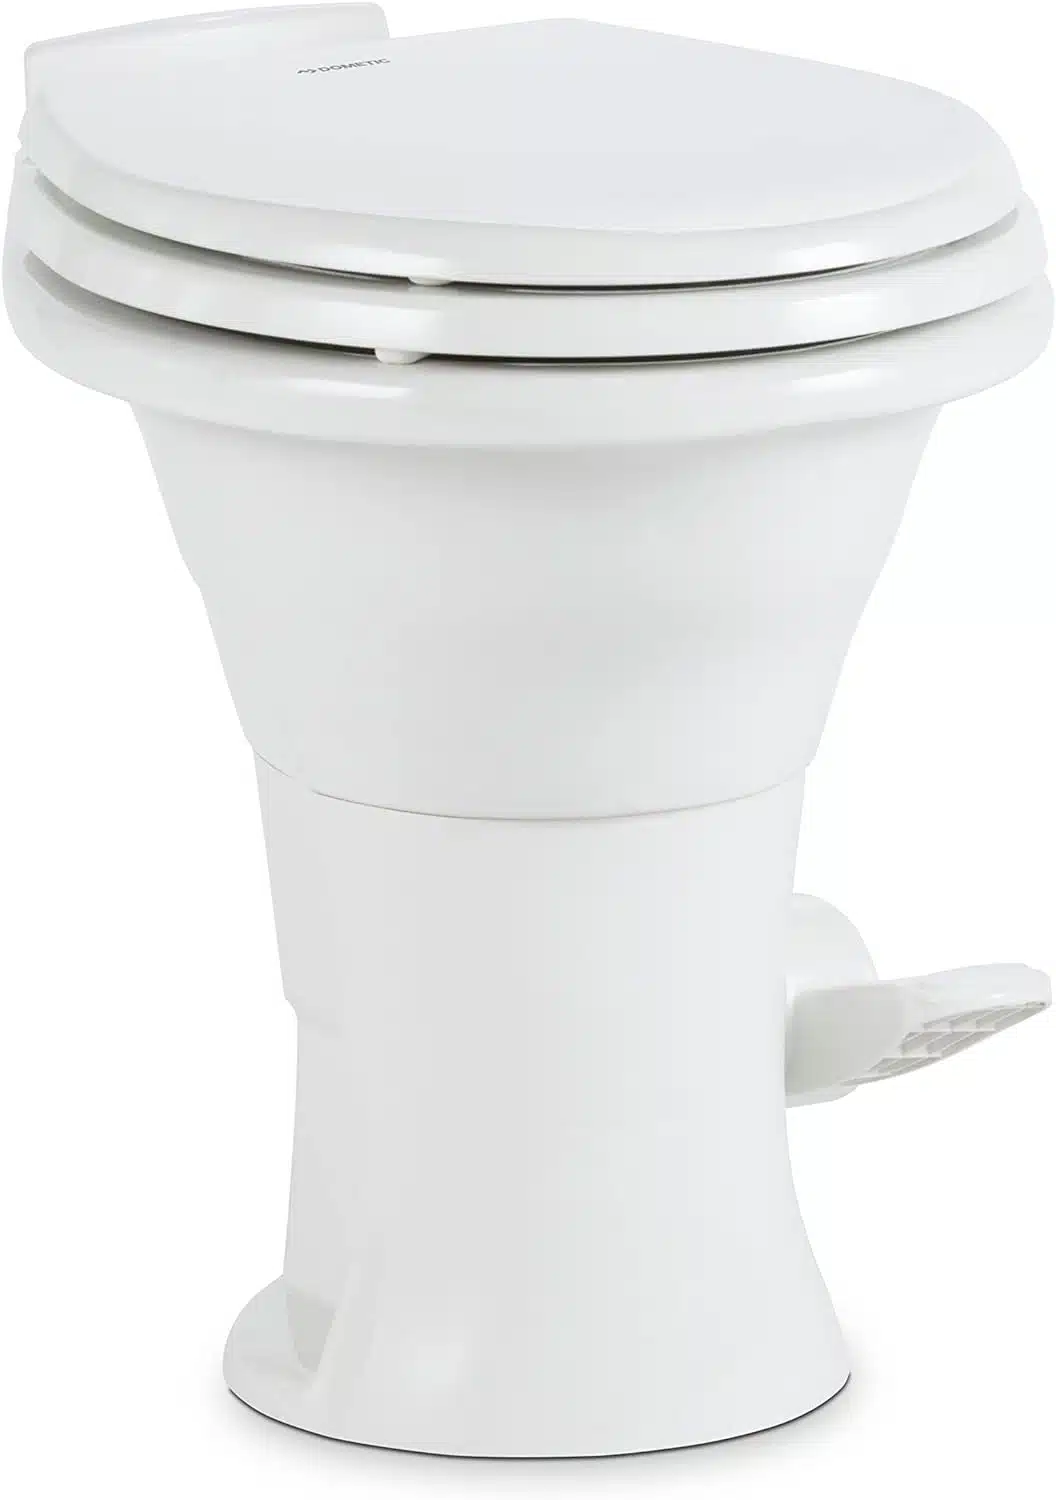 Dometic 310 Series Standard Height Toilet